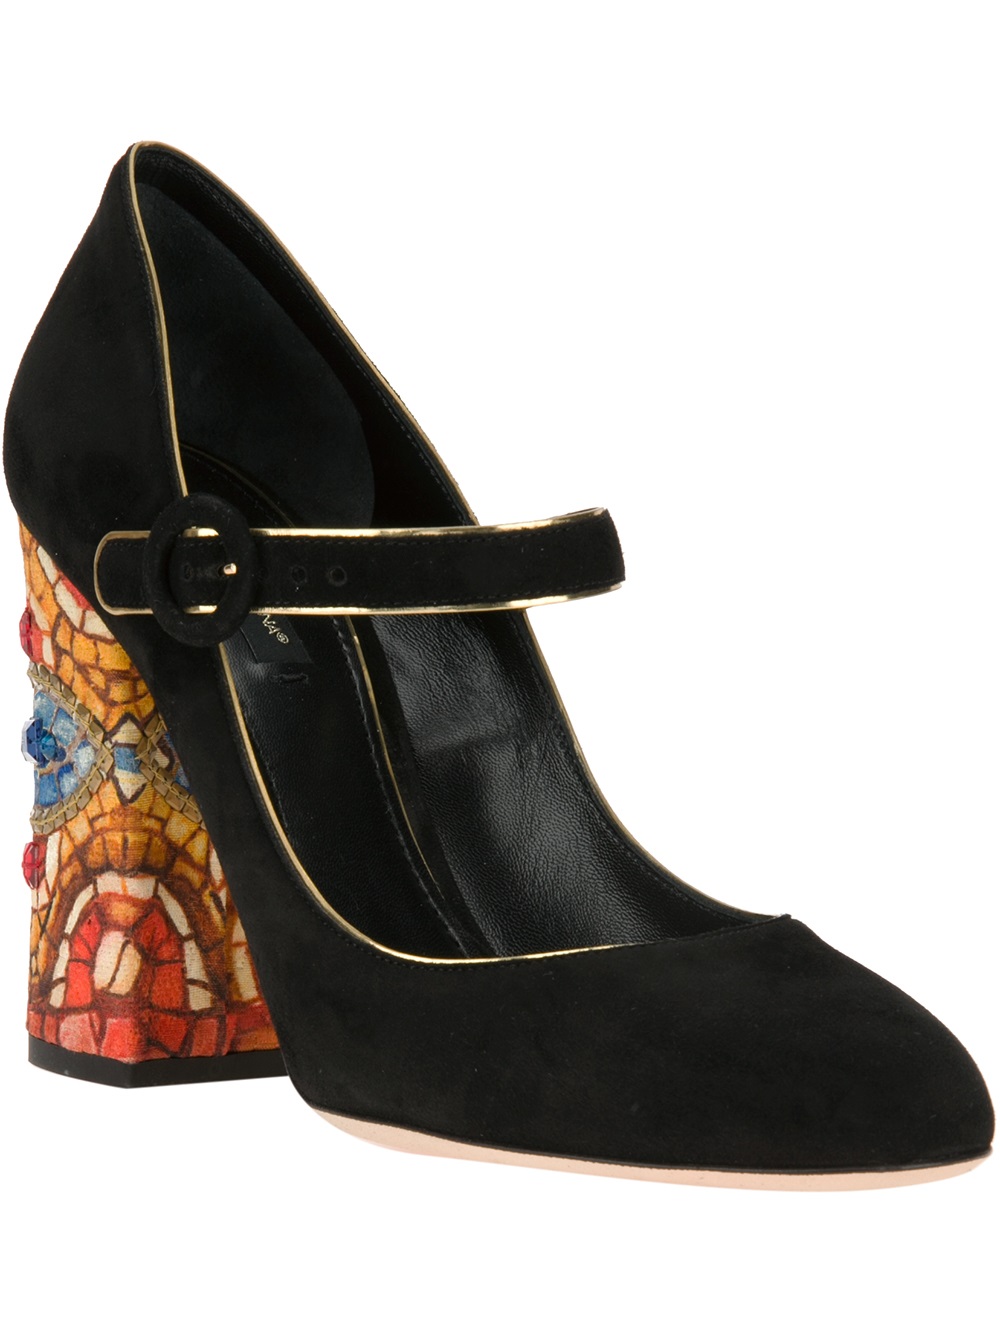 Dolce & Gabbana Embellished Heel Pump in Black | Lyst